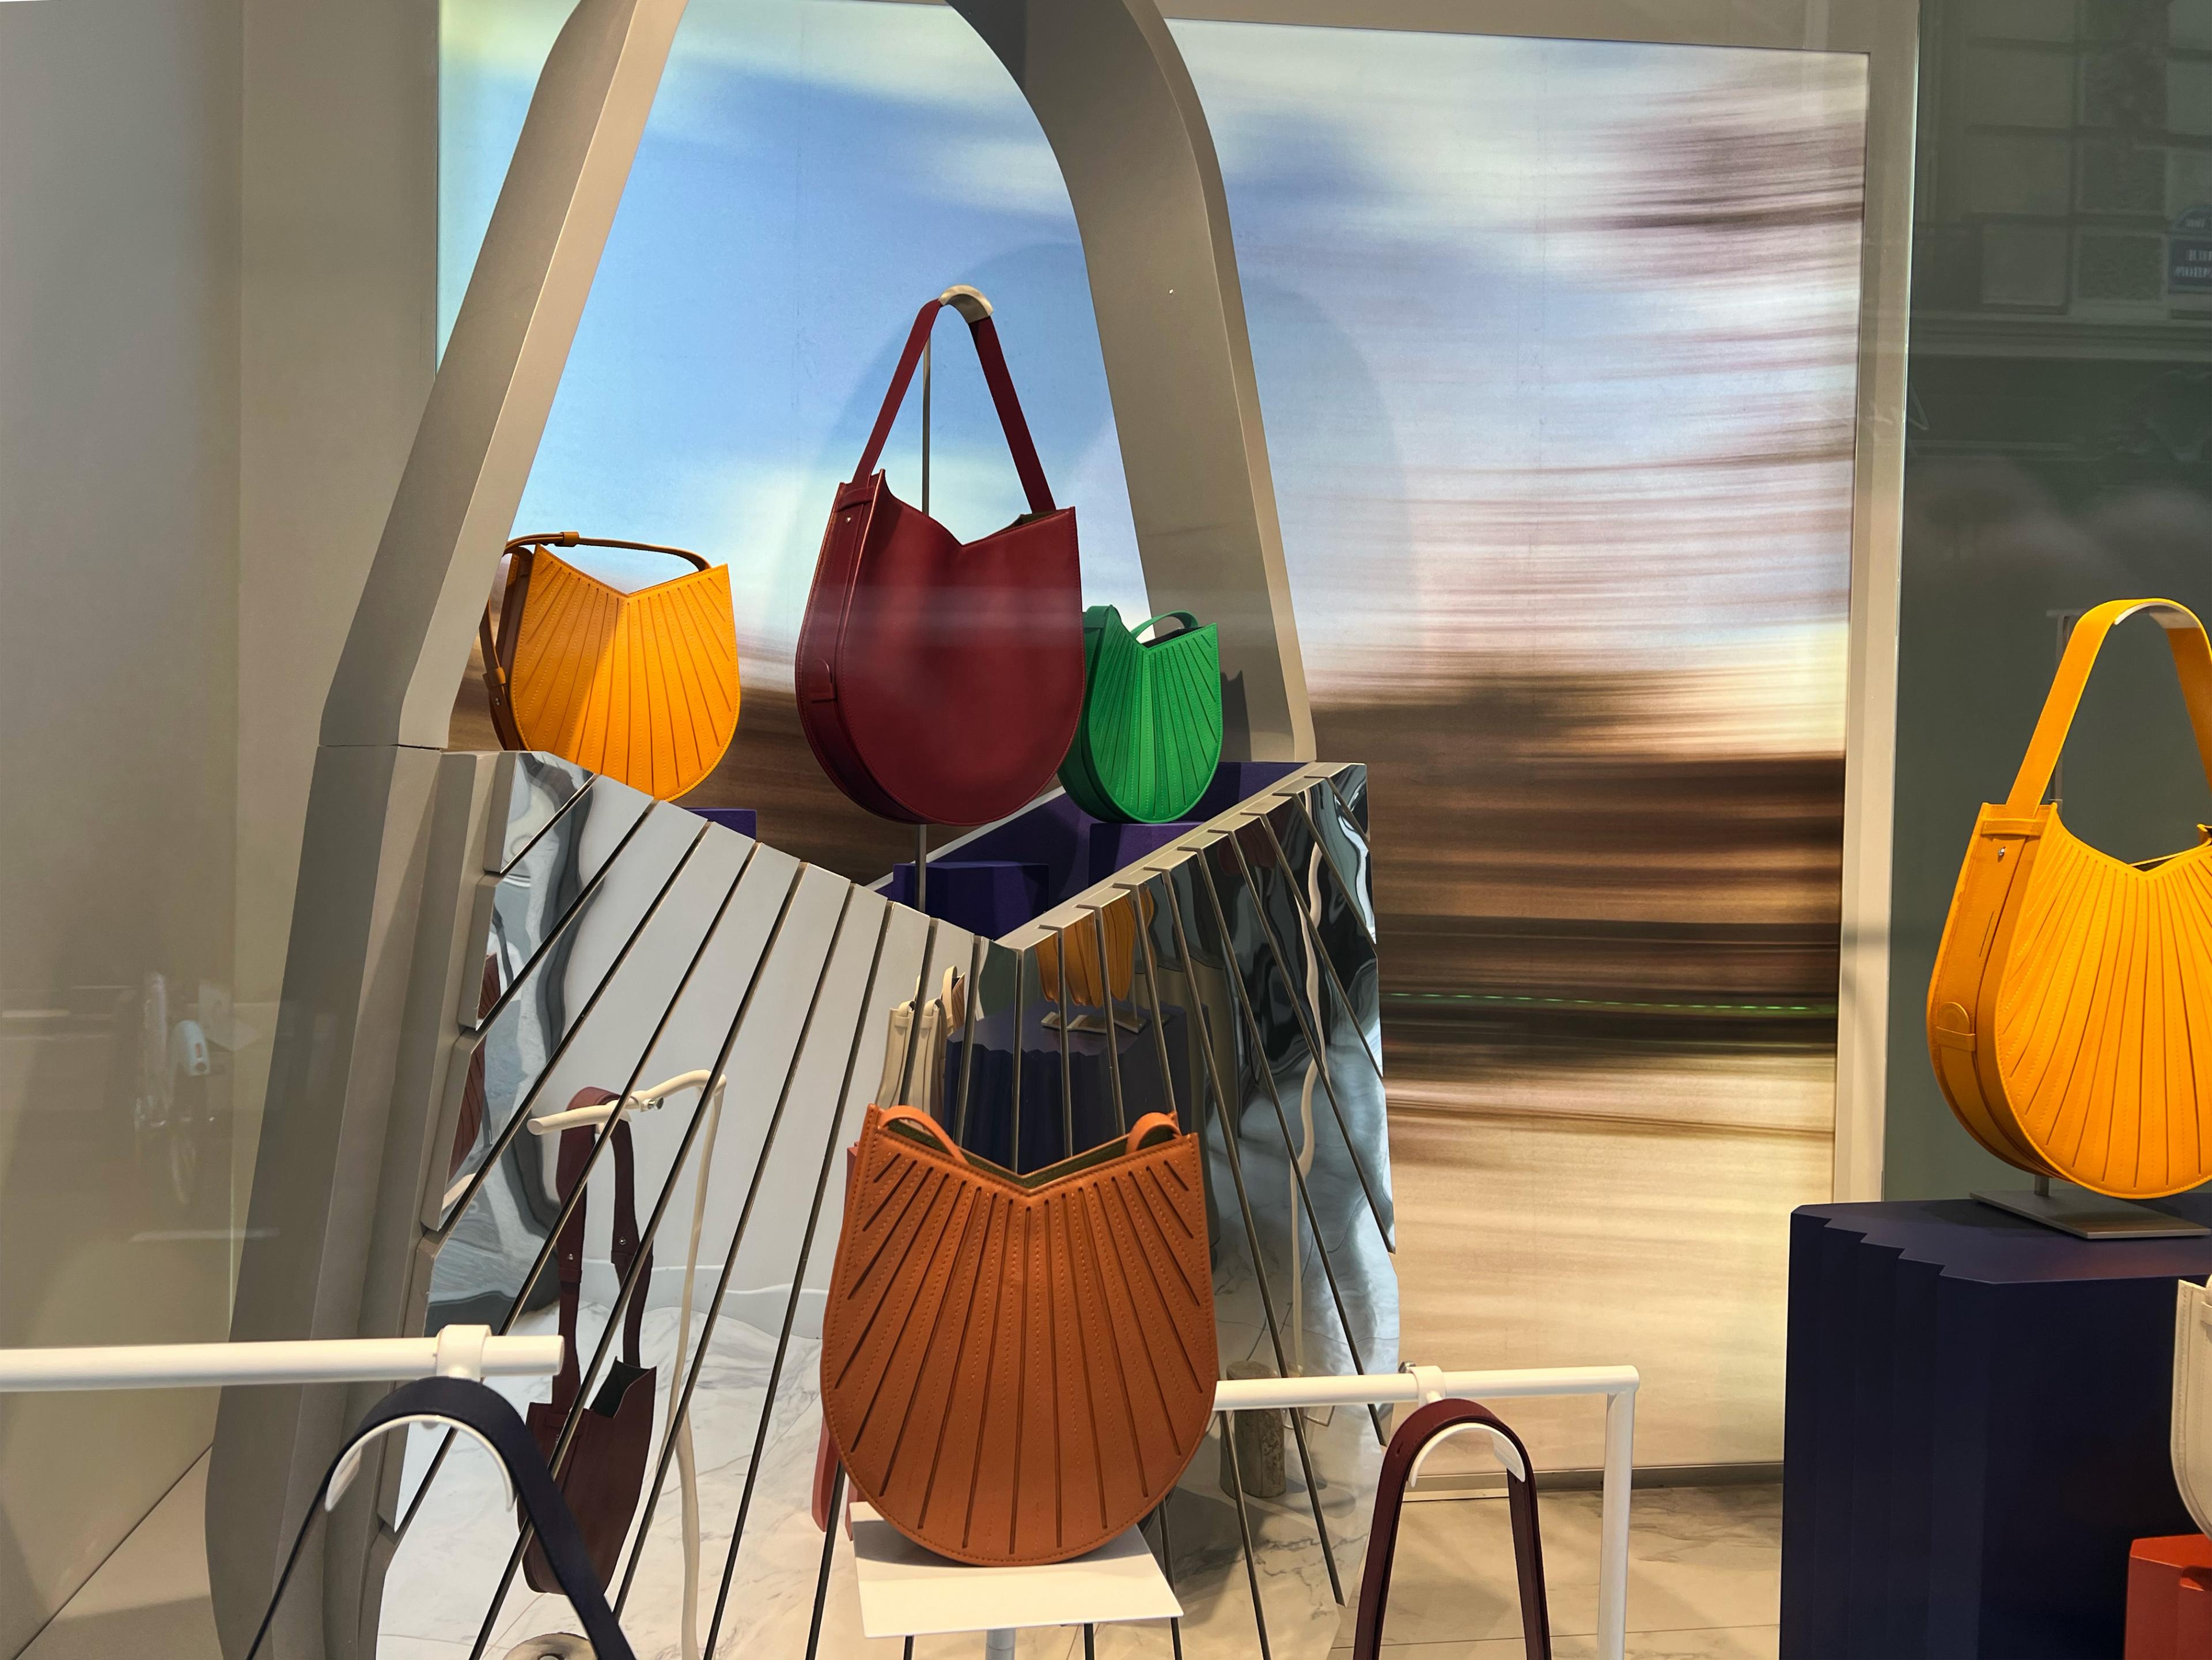 designer handbags on a contemporary display shaped like a metal handbag